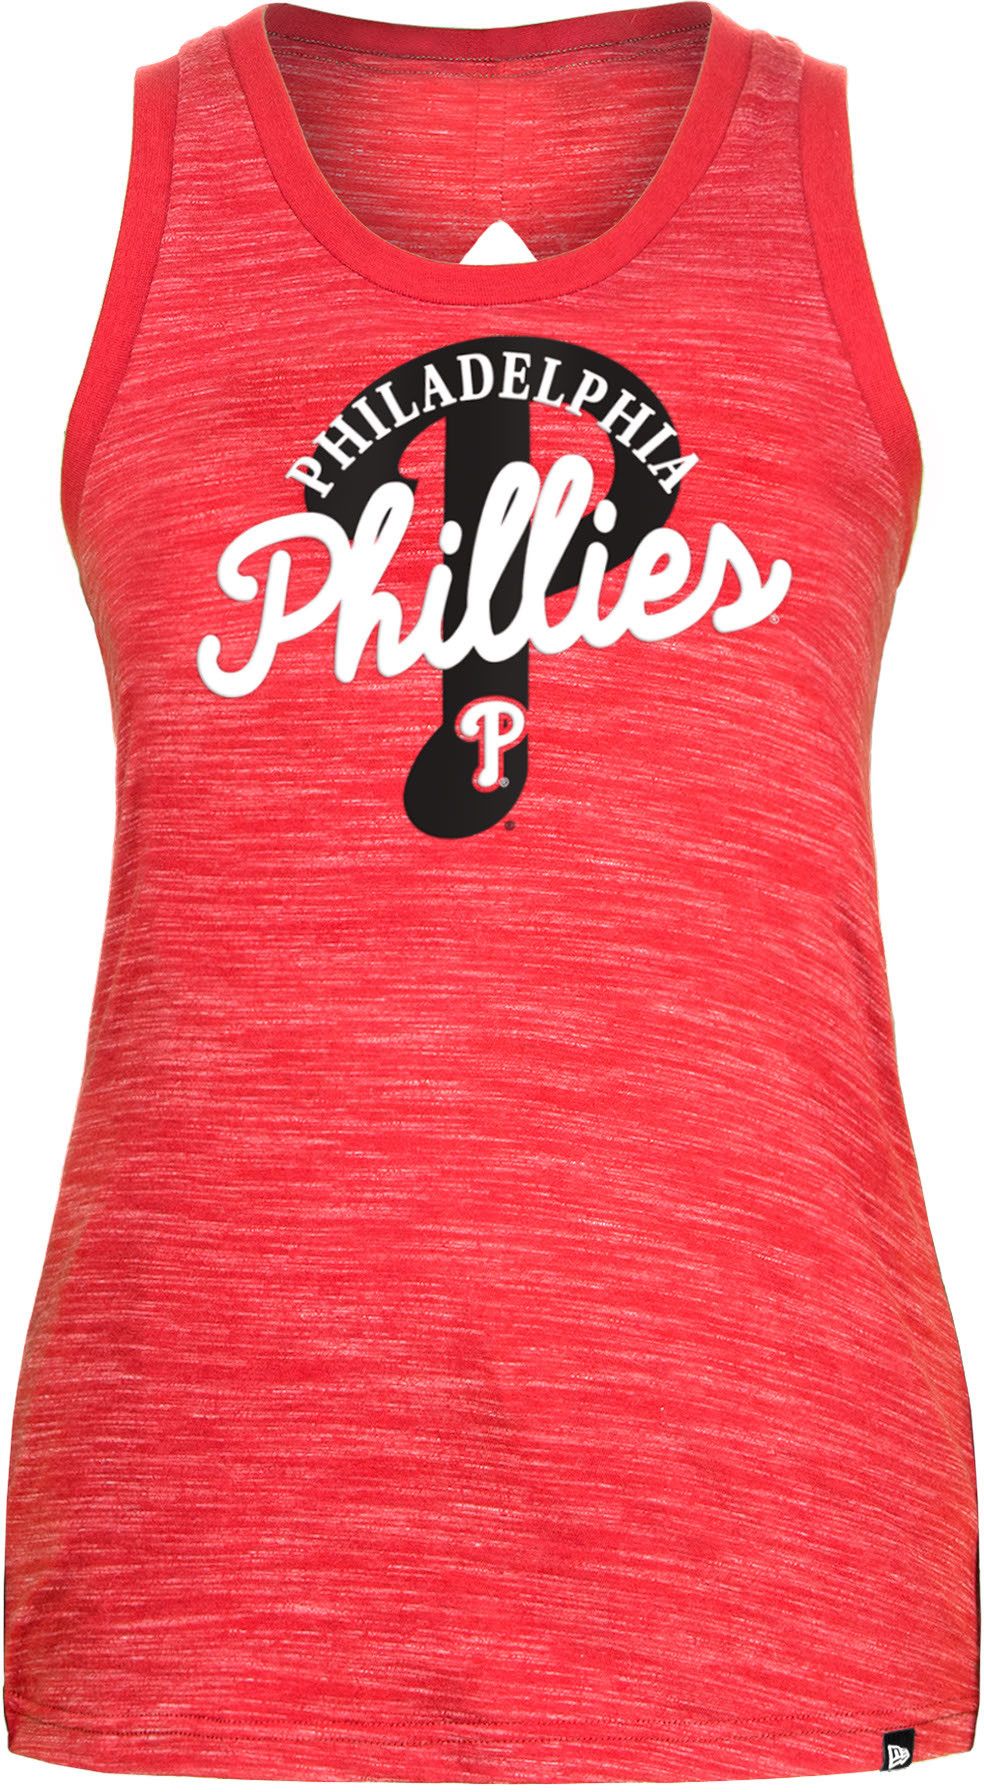 Women's Phillies jersey